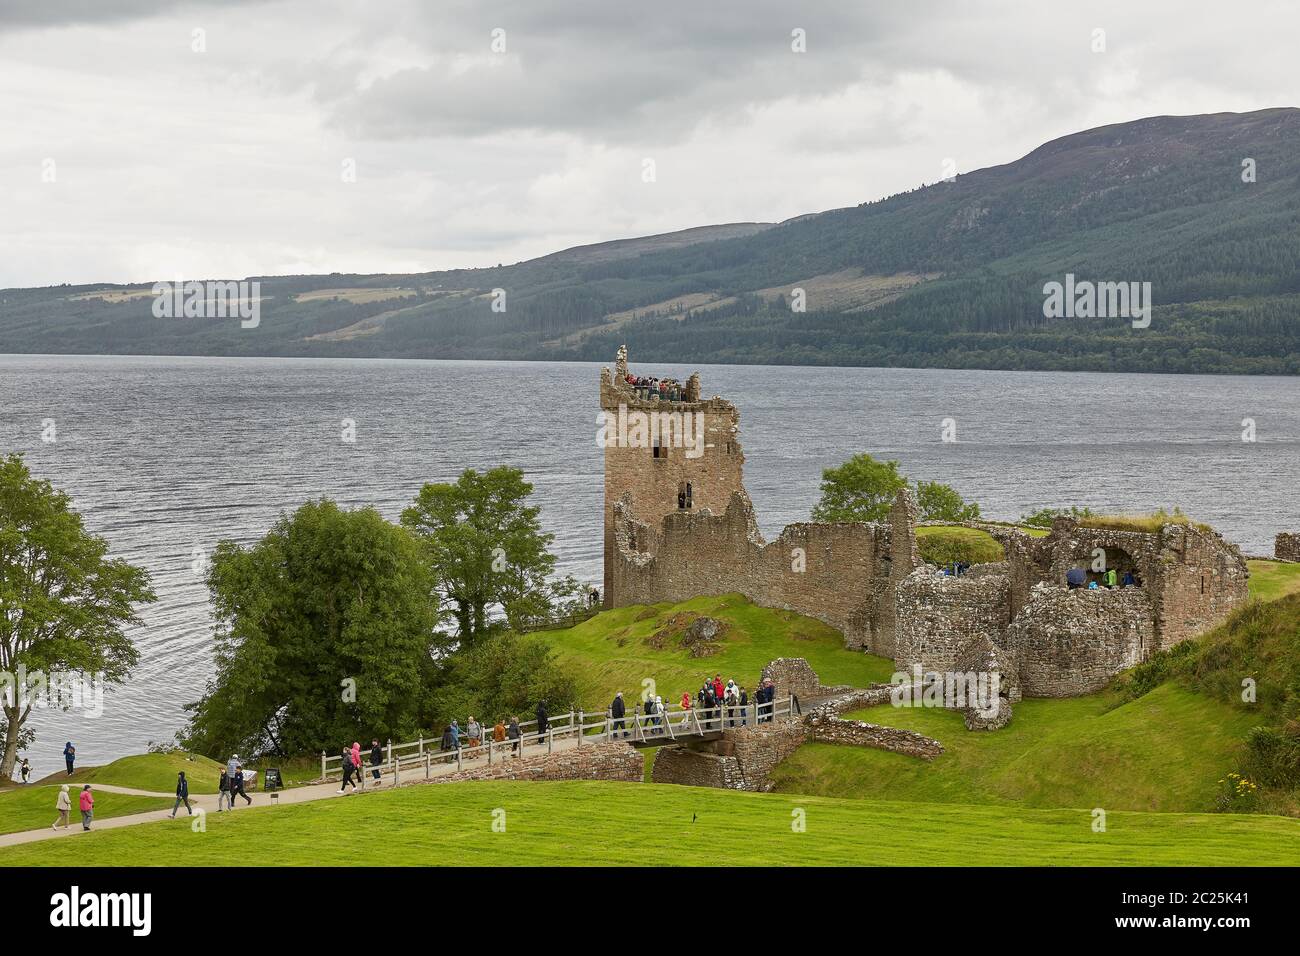 People enjoying vist at Urquhart Castle on the Shore of Loch Ness, Scotland. Stock Photo